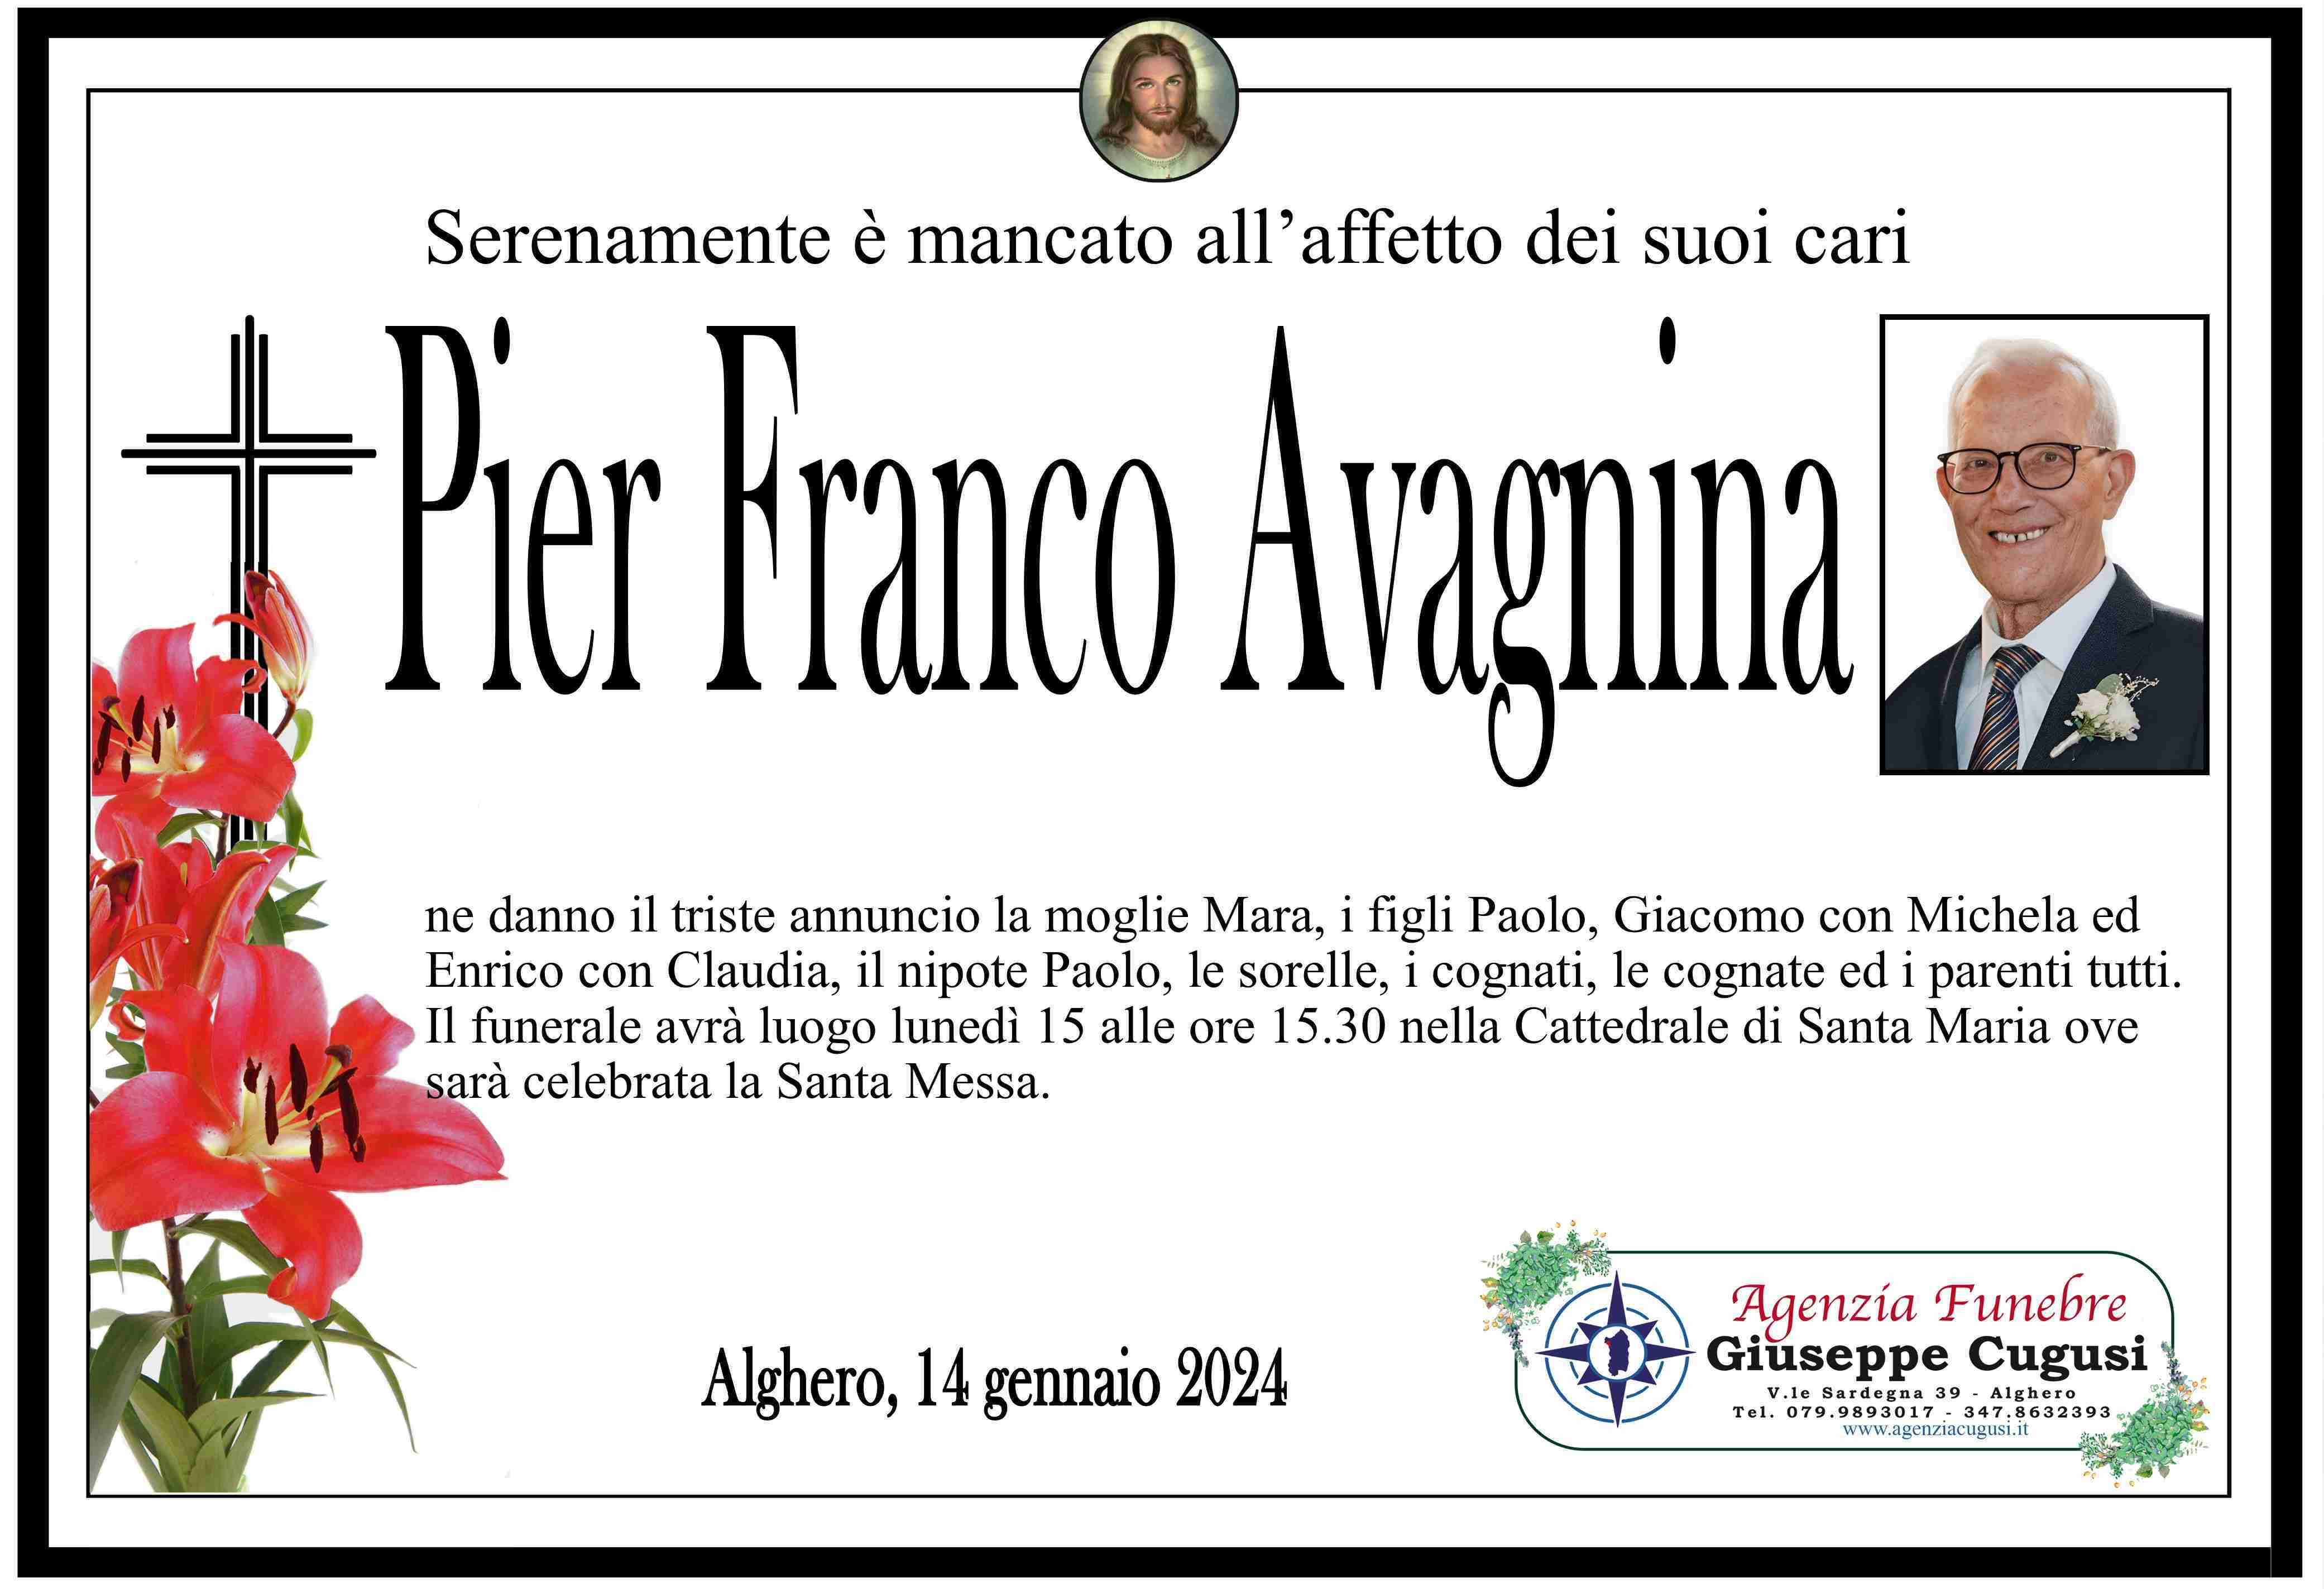 Pier Franco Avagnina